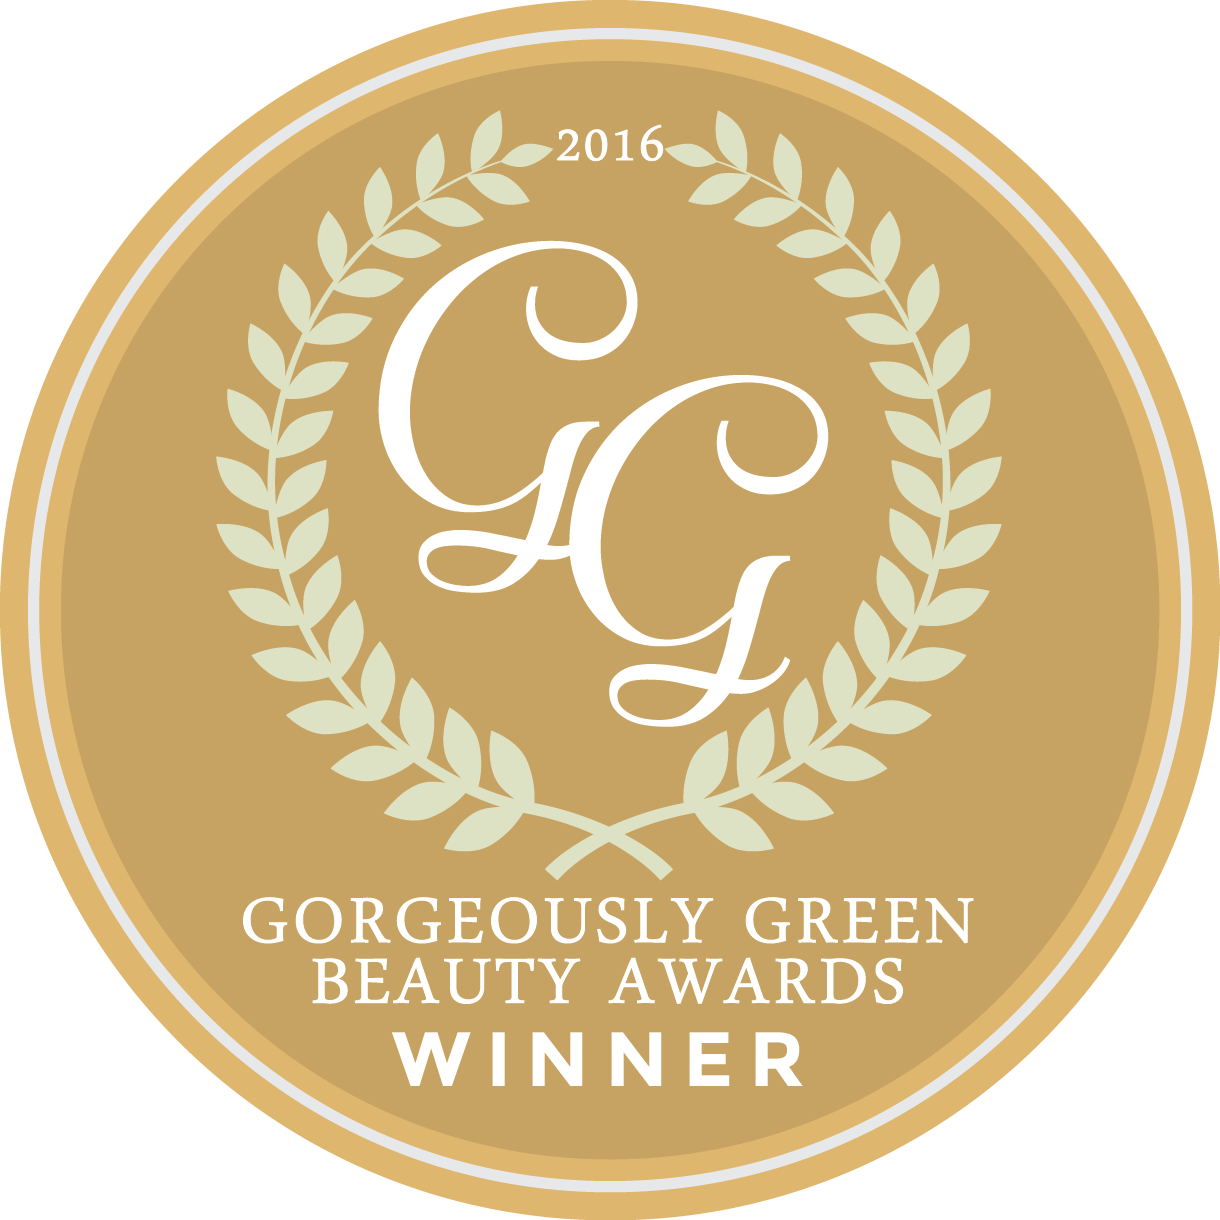 Gorgeously Green Beauty Awards Winner 2016 - seal